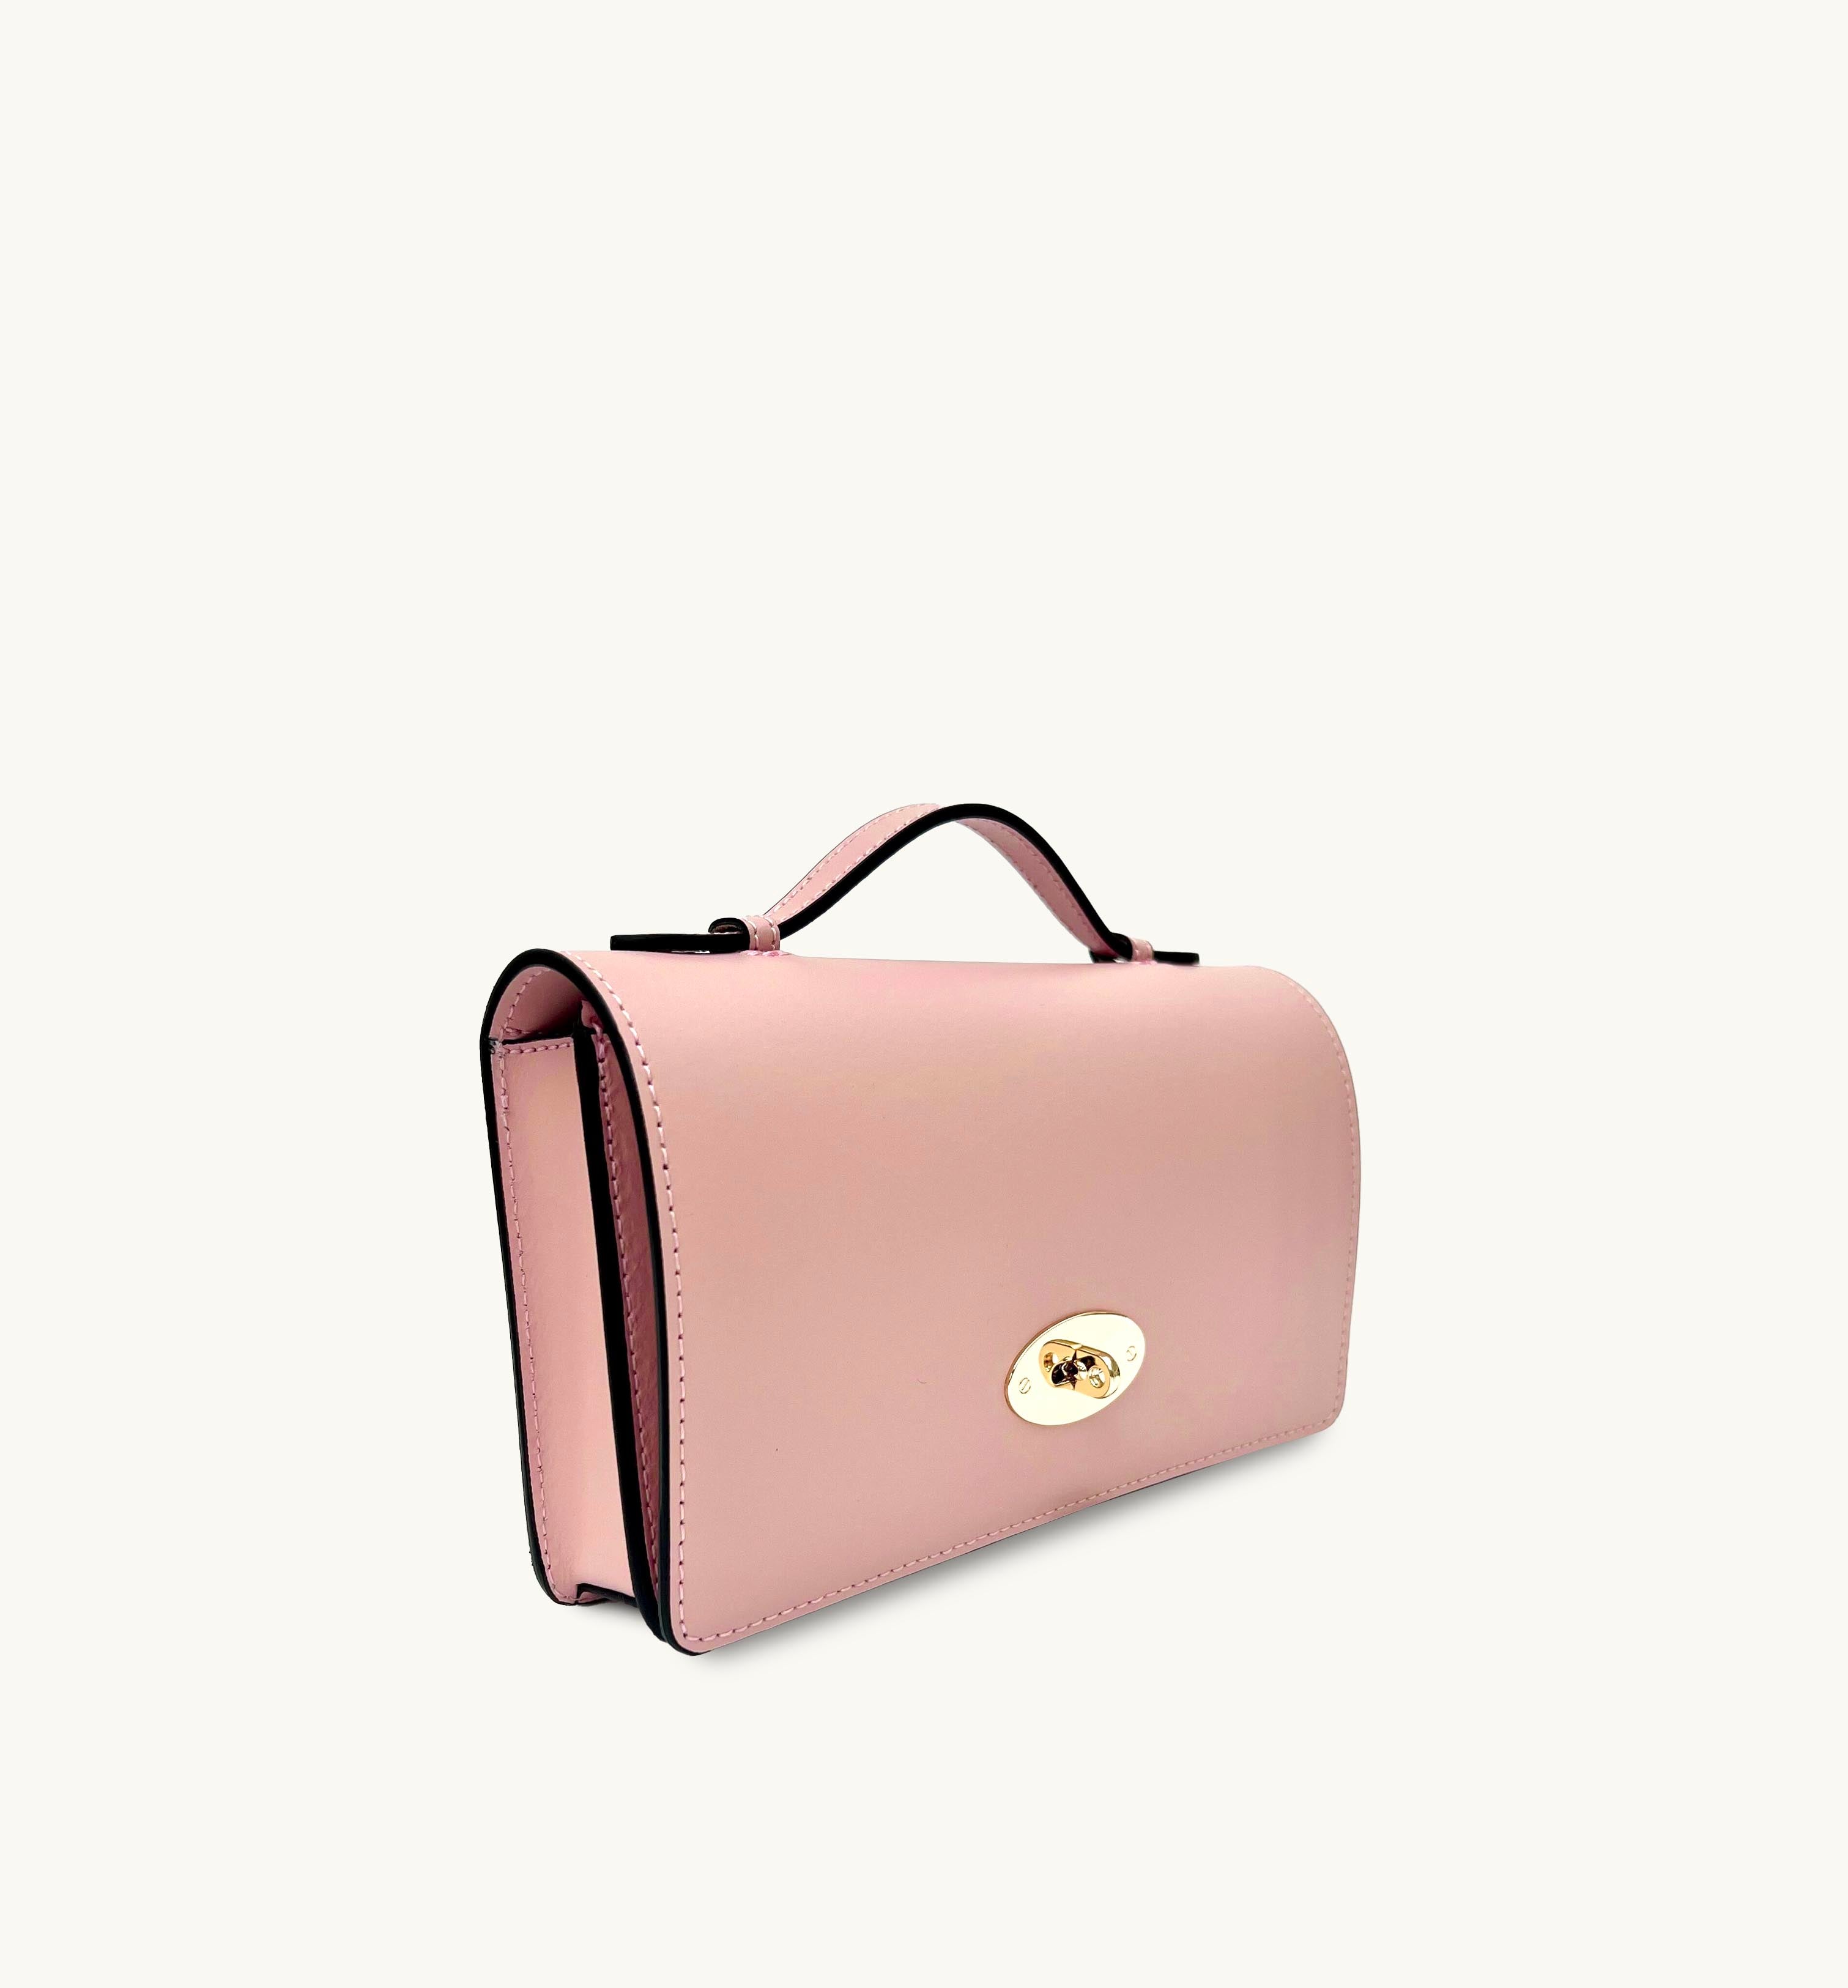 The Amelia Baby Pink Leather Bag